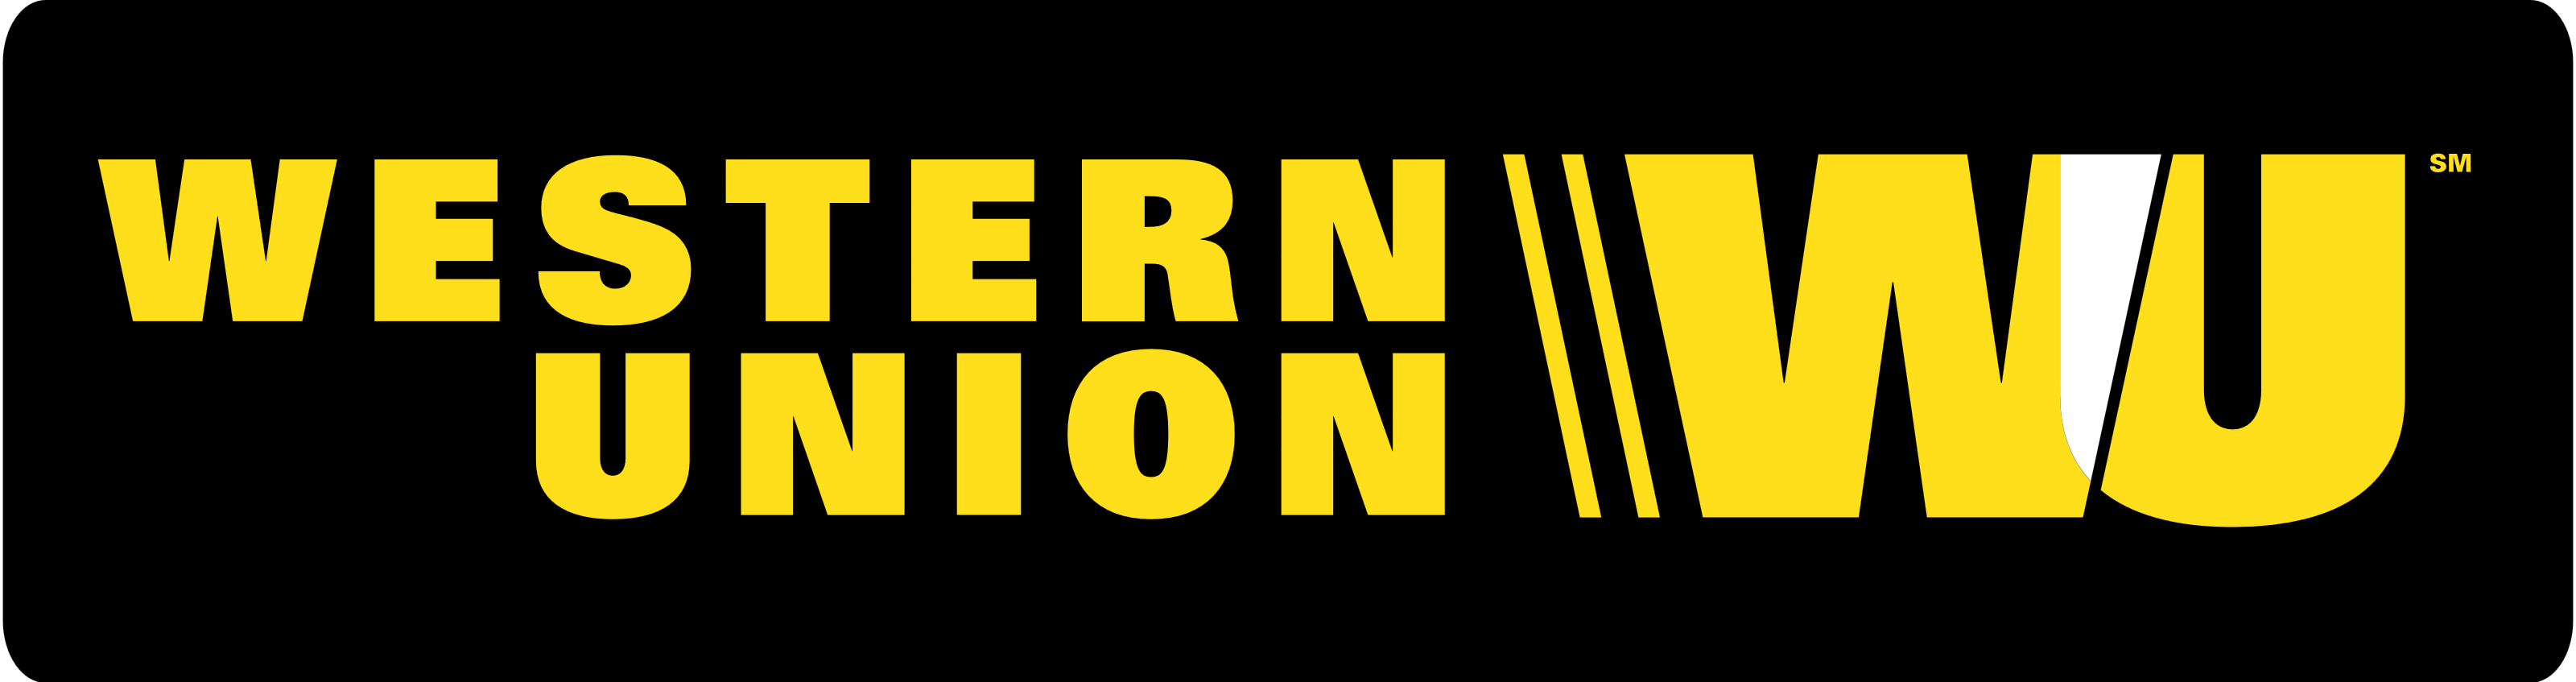 Western Union logo, logotype